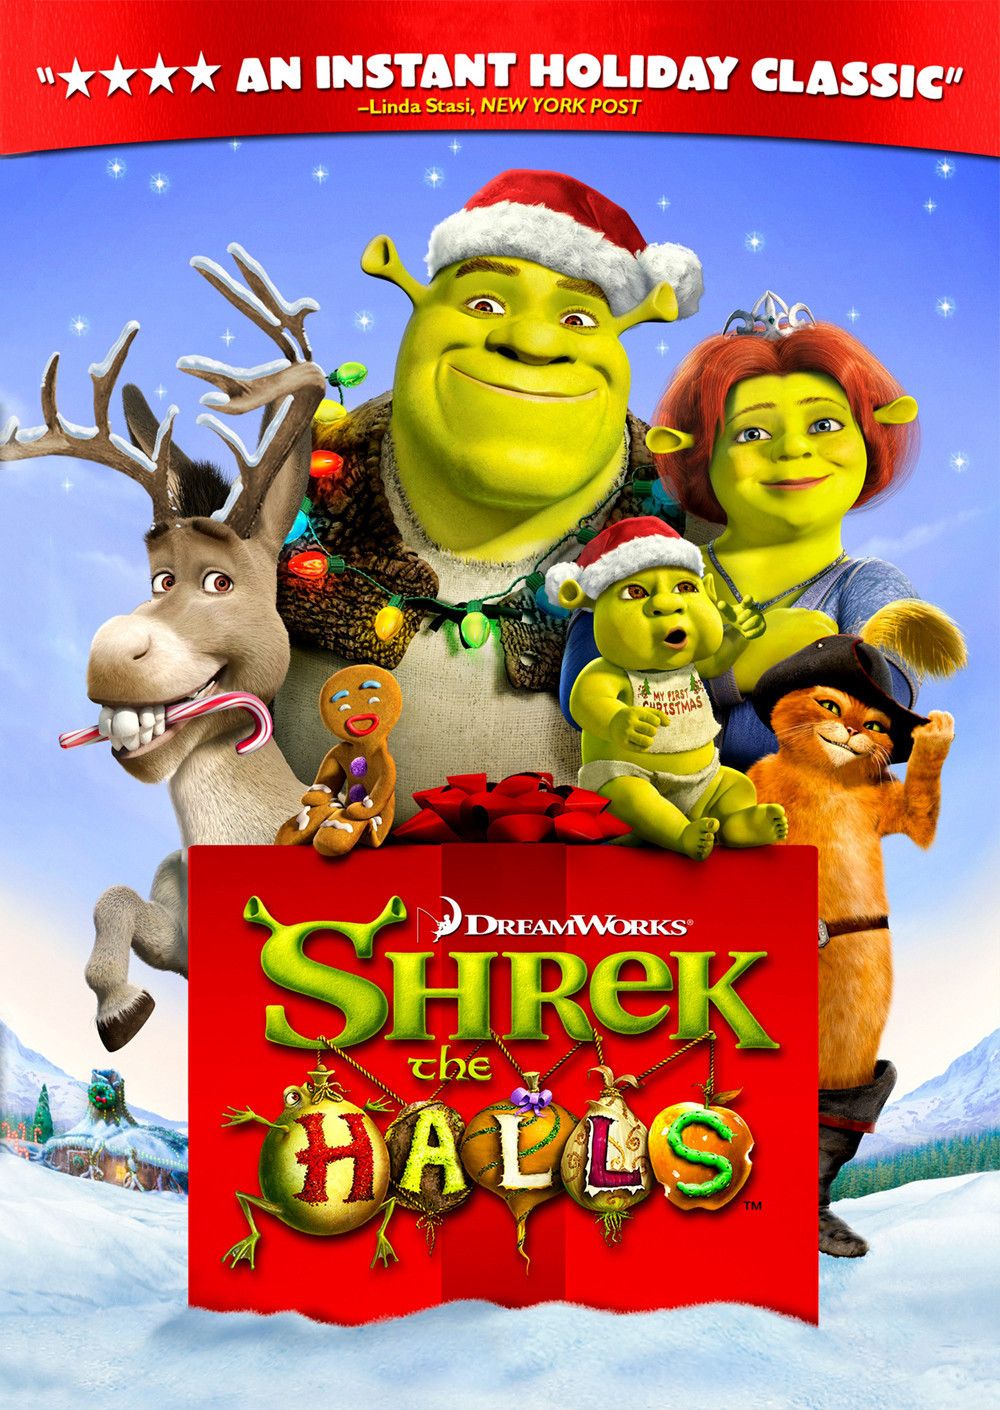 Shrek the Halls (TV Short 2007)